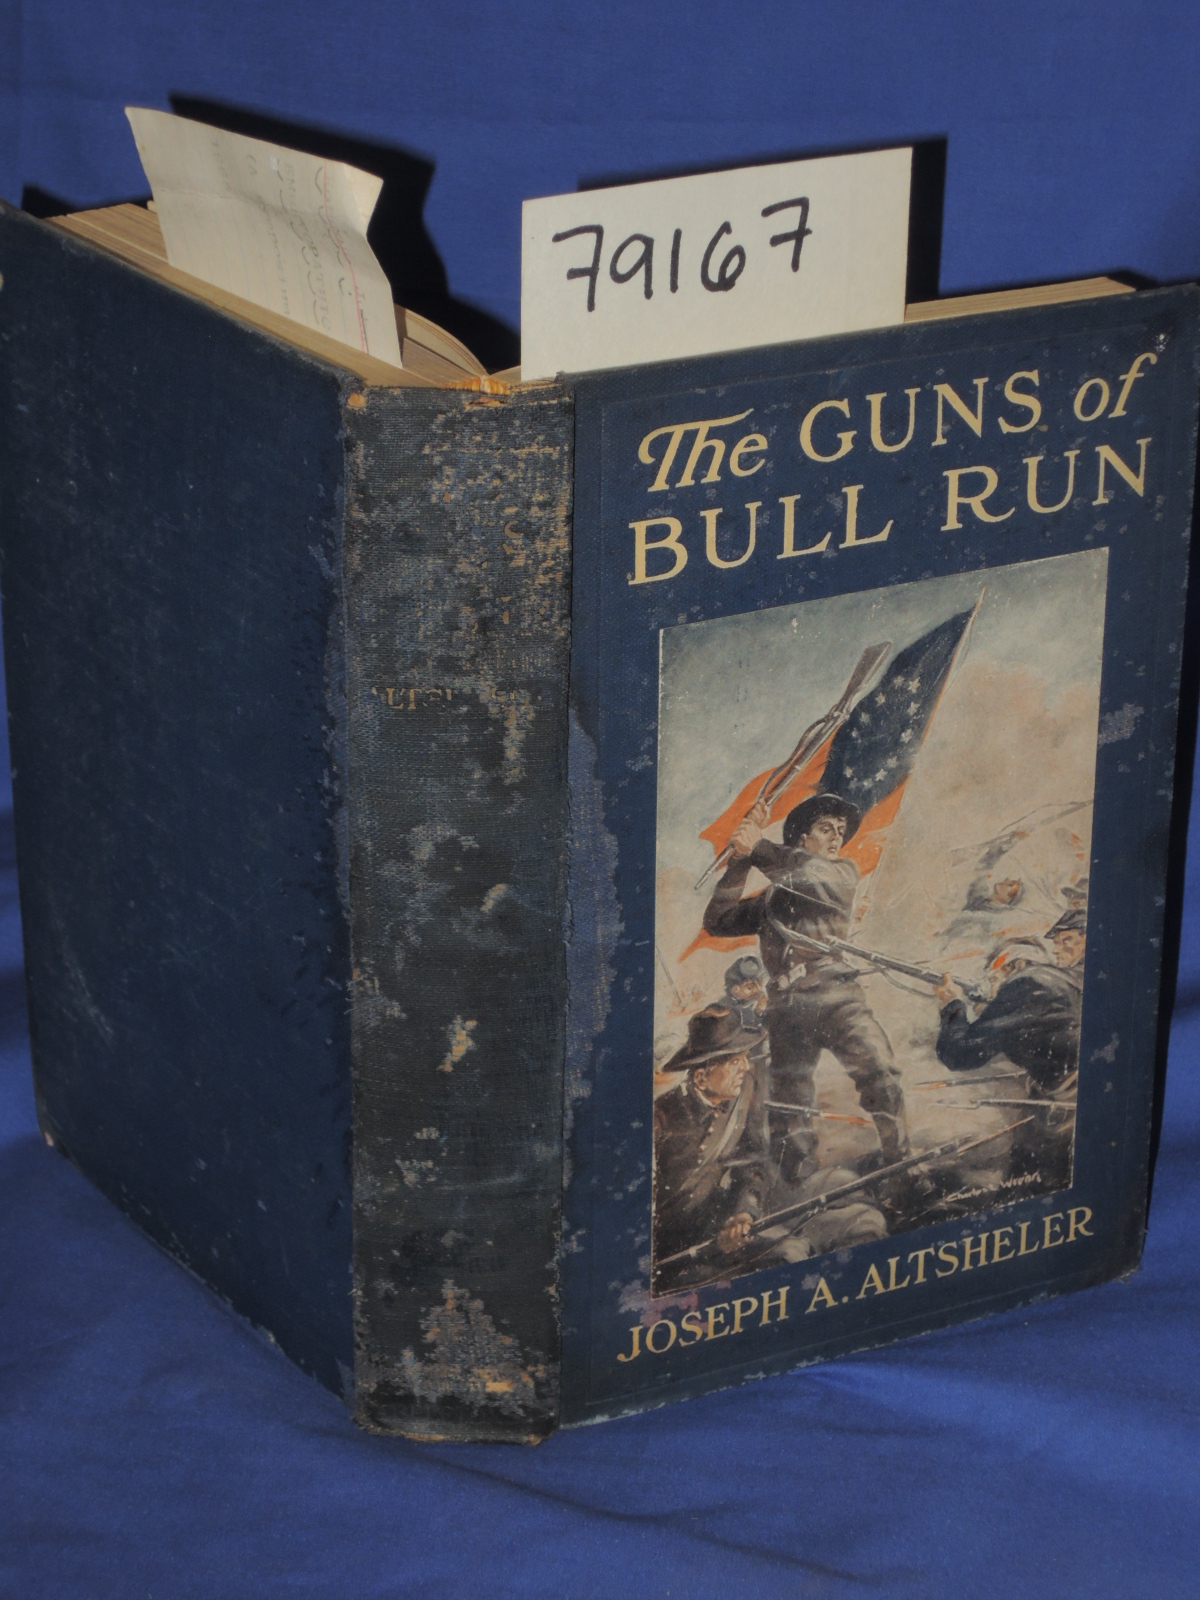 Altsheler, Joseph A.: THE GUNS OF BULL RUN